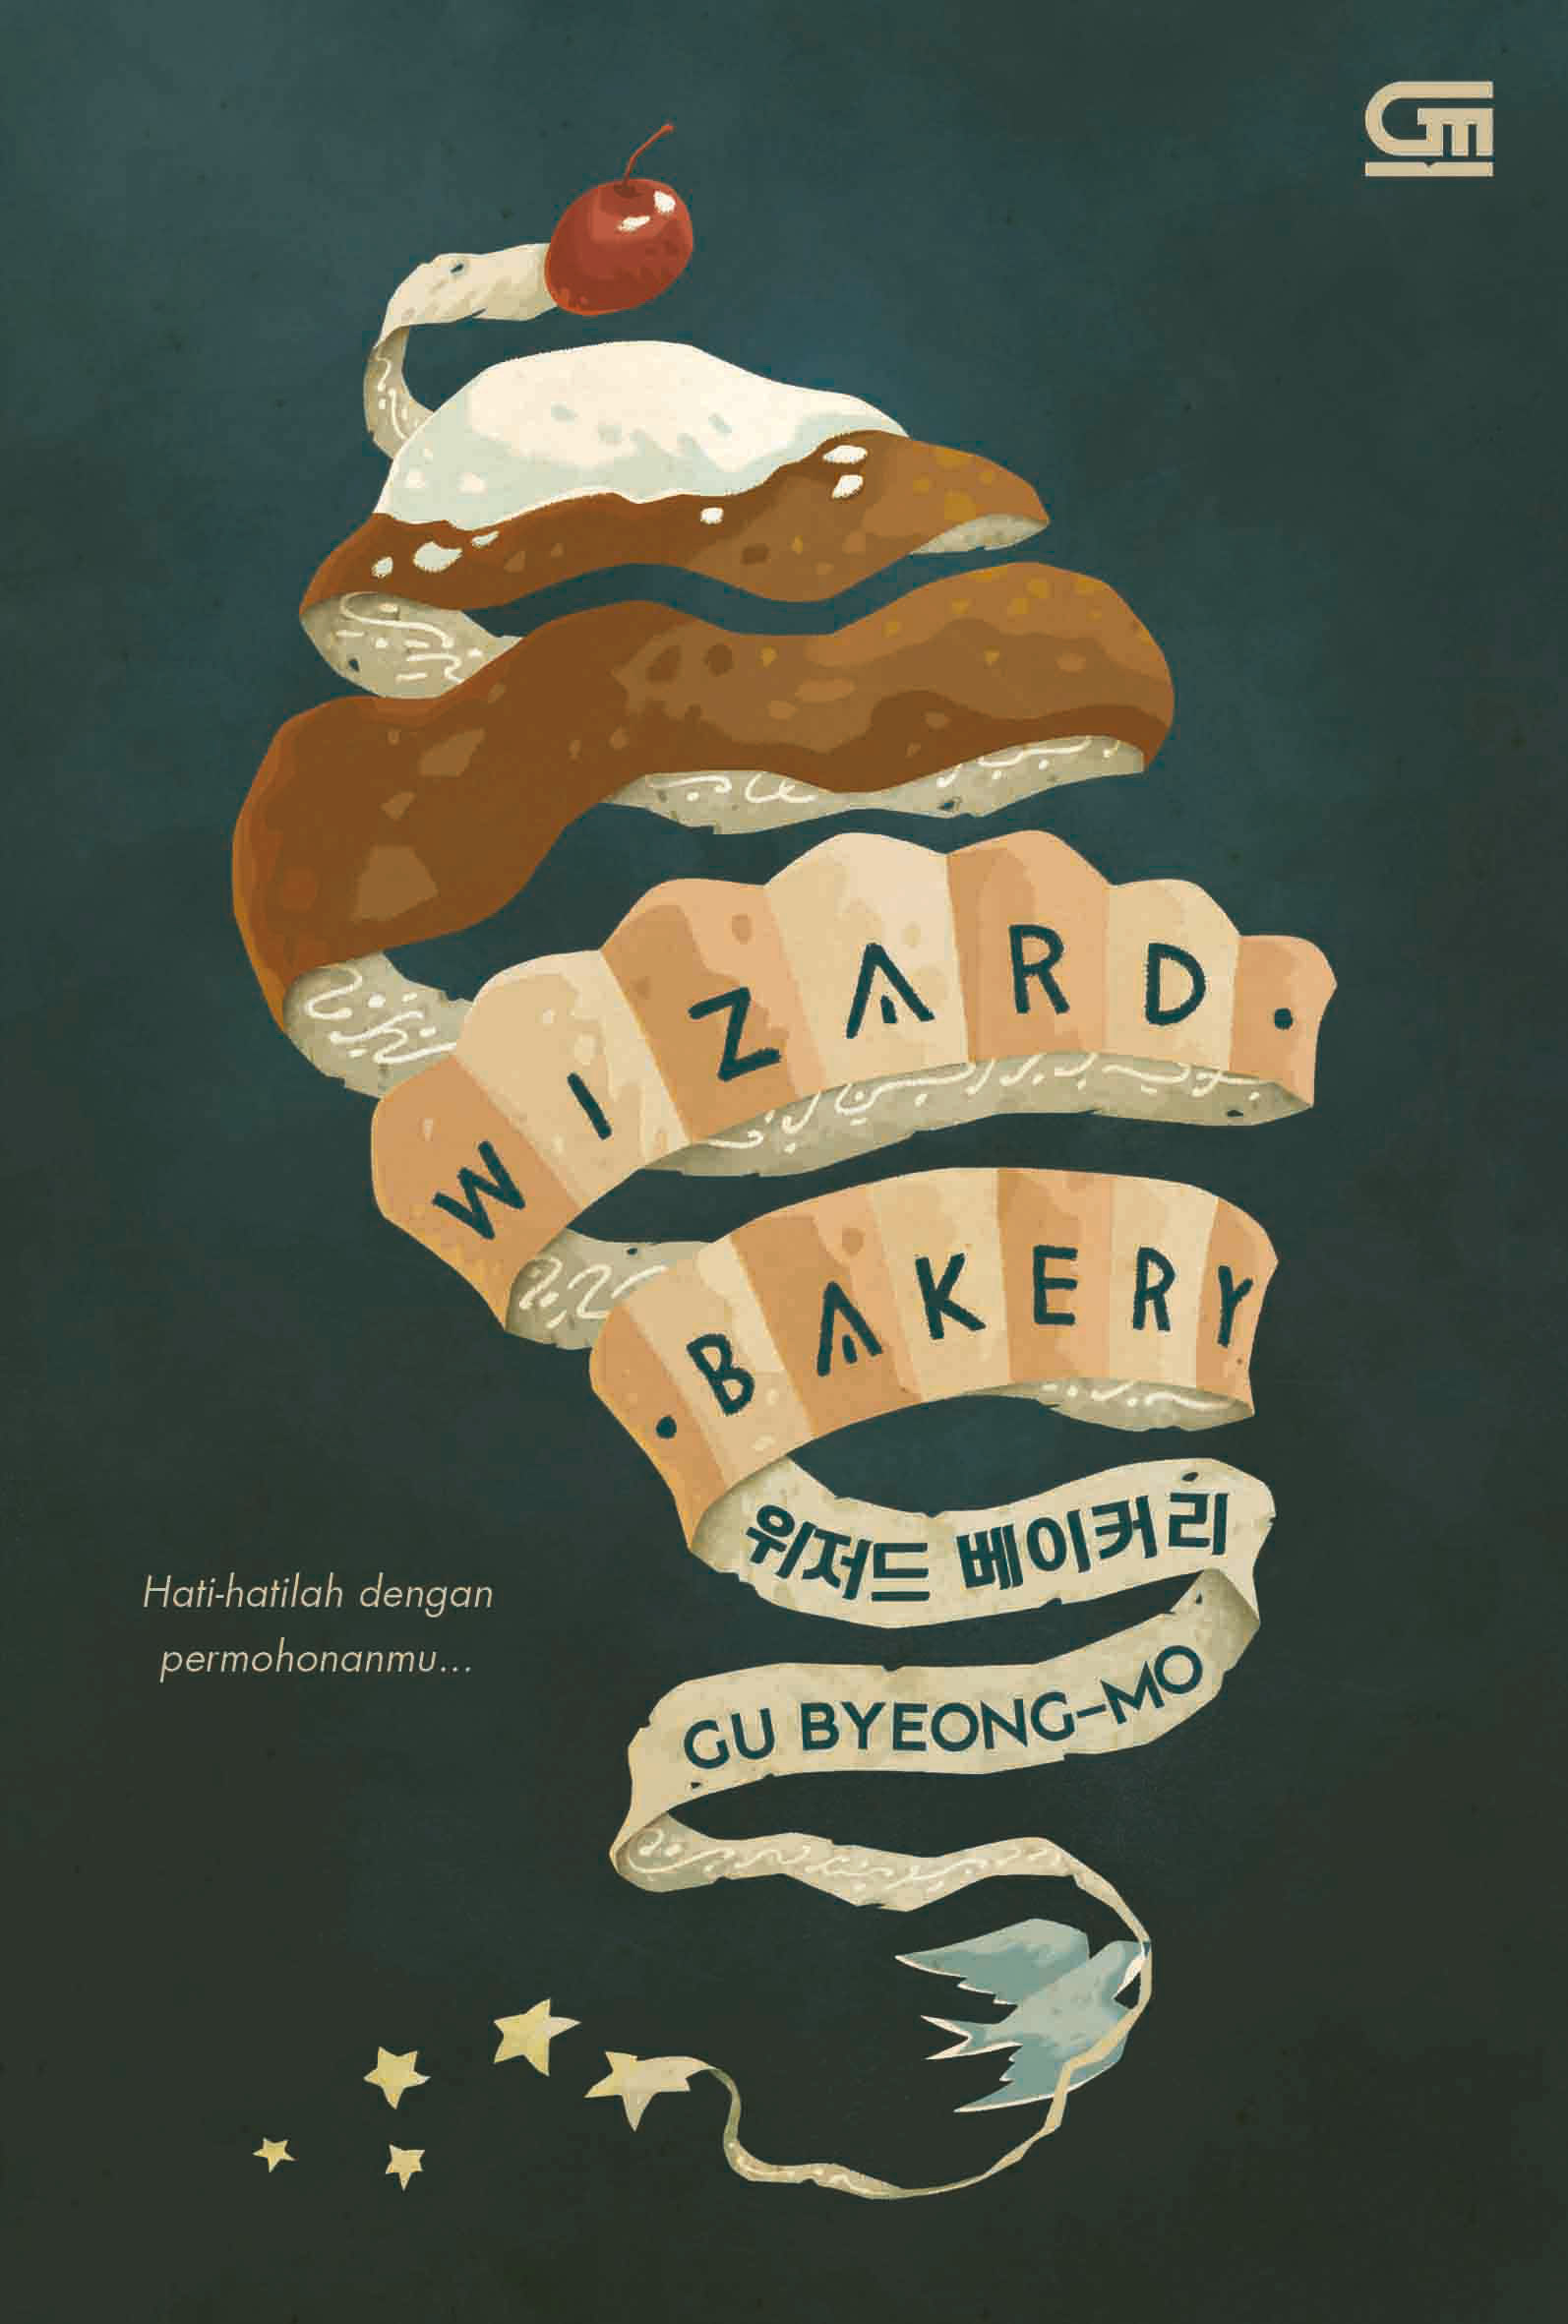 Wizard Bakery